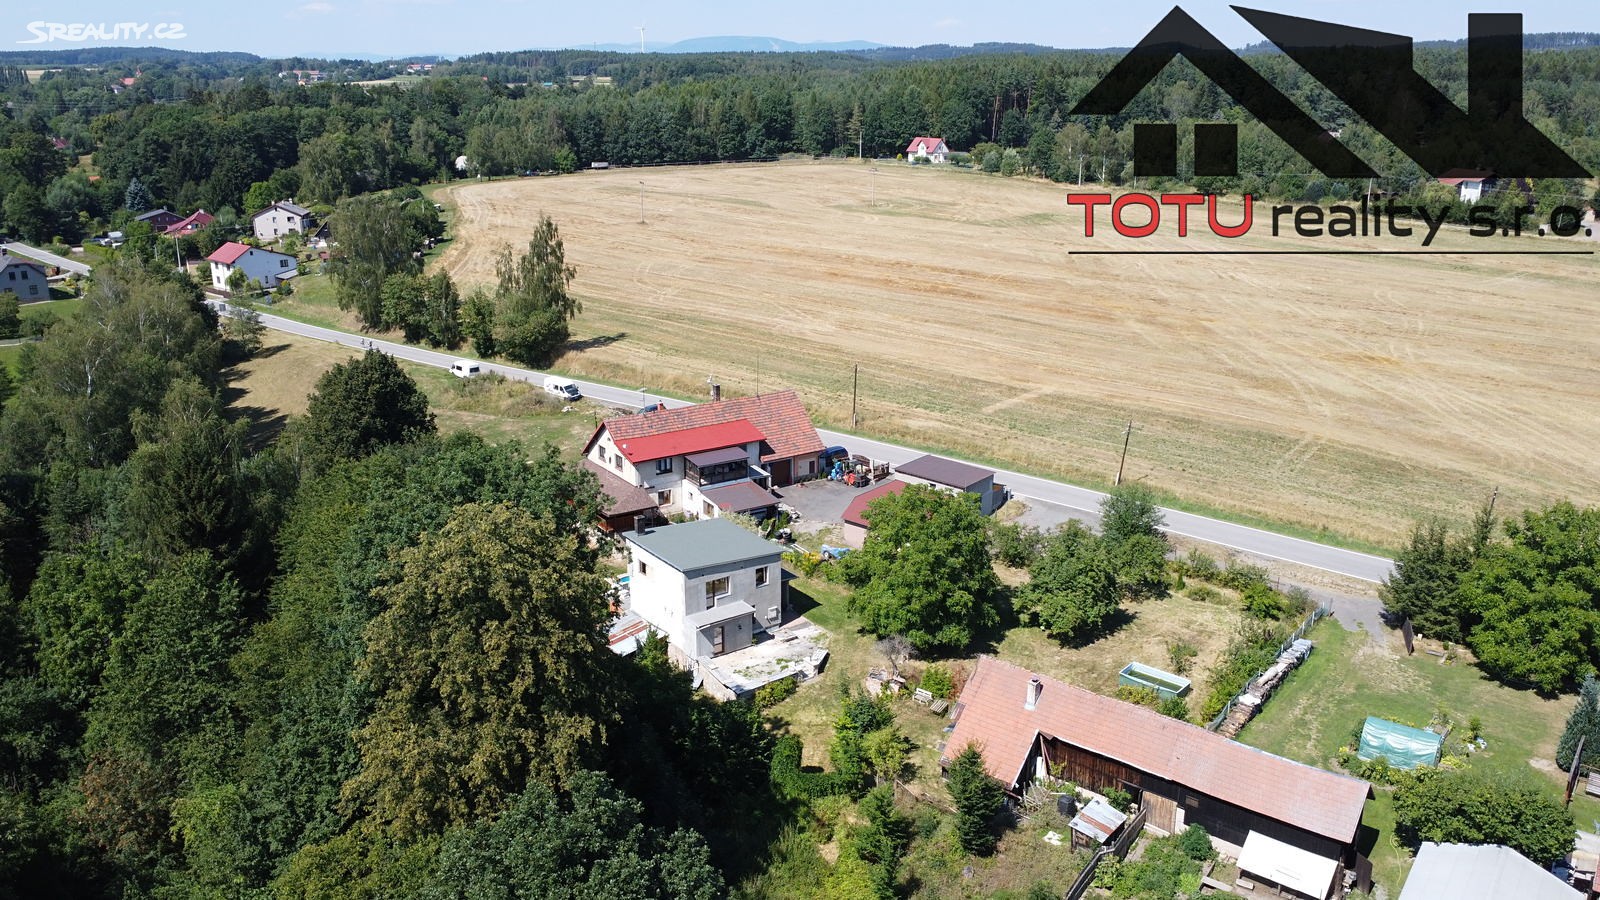 Prodej  rodinného domu 160 m², pozemek 1 459 m², Vítězná - Komárov, okres Trutnov